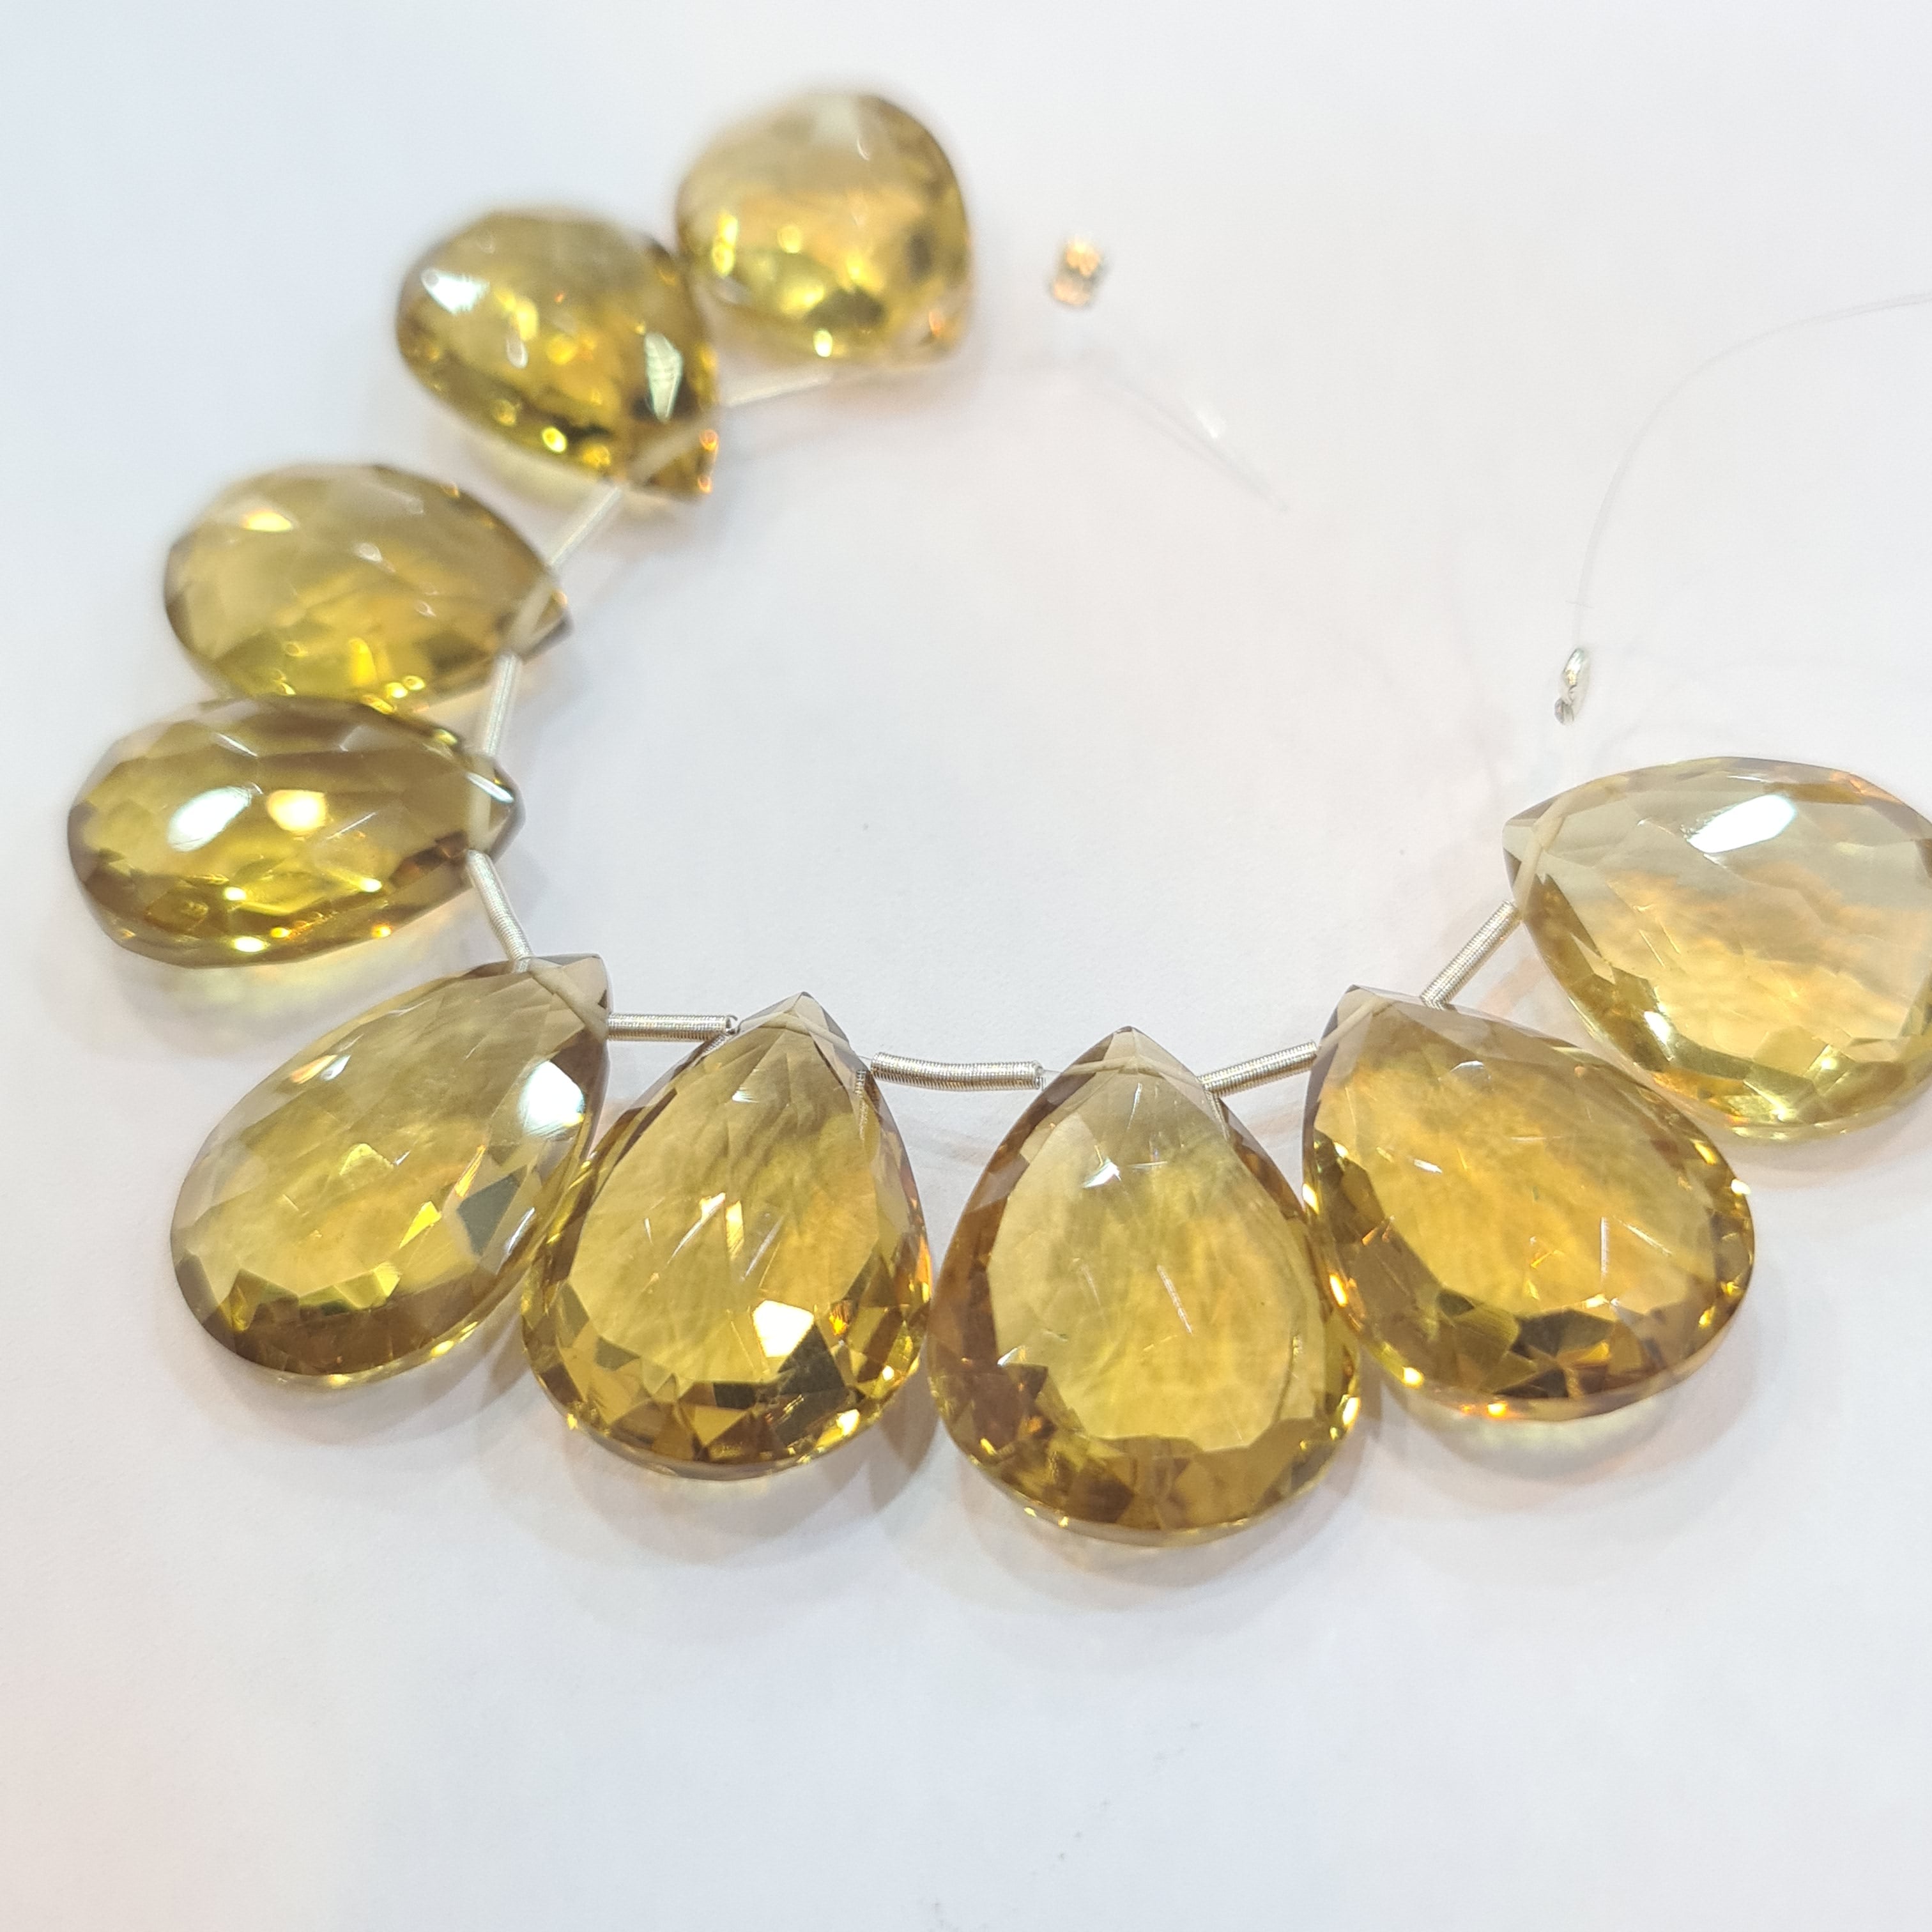 Natural Lemon Quartz Tear Drops Shape,  20x14mm Beads Lemon Quartz Beads Fancy Cut Shape Beads Luster, Faceted Drops Gemstone Beads - The LabradoriteKing